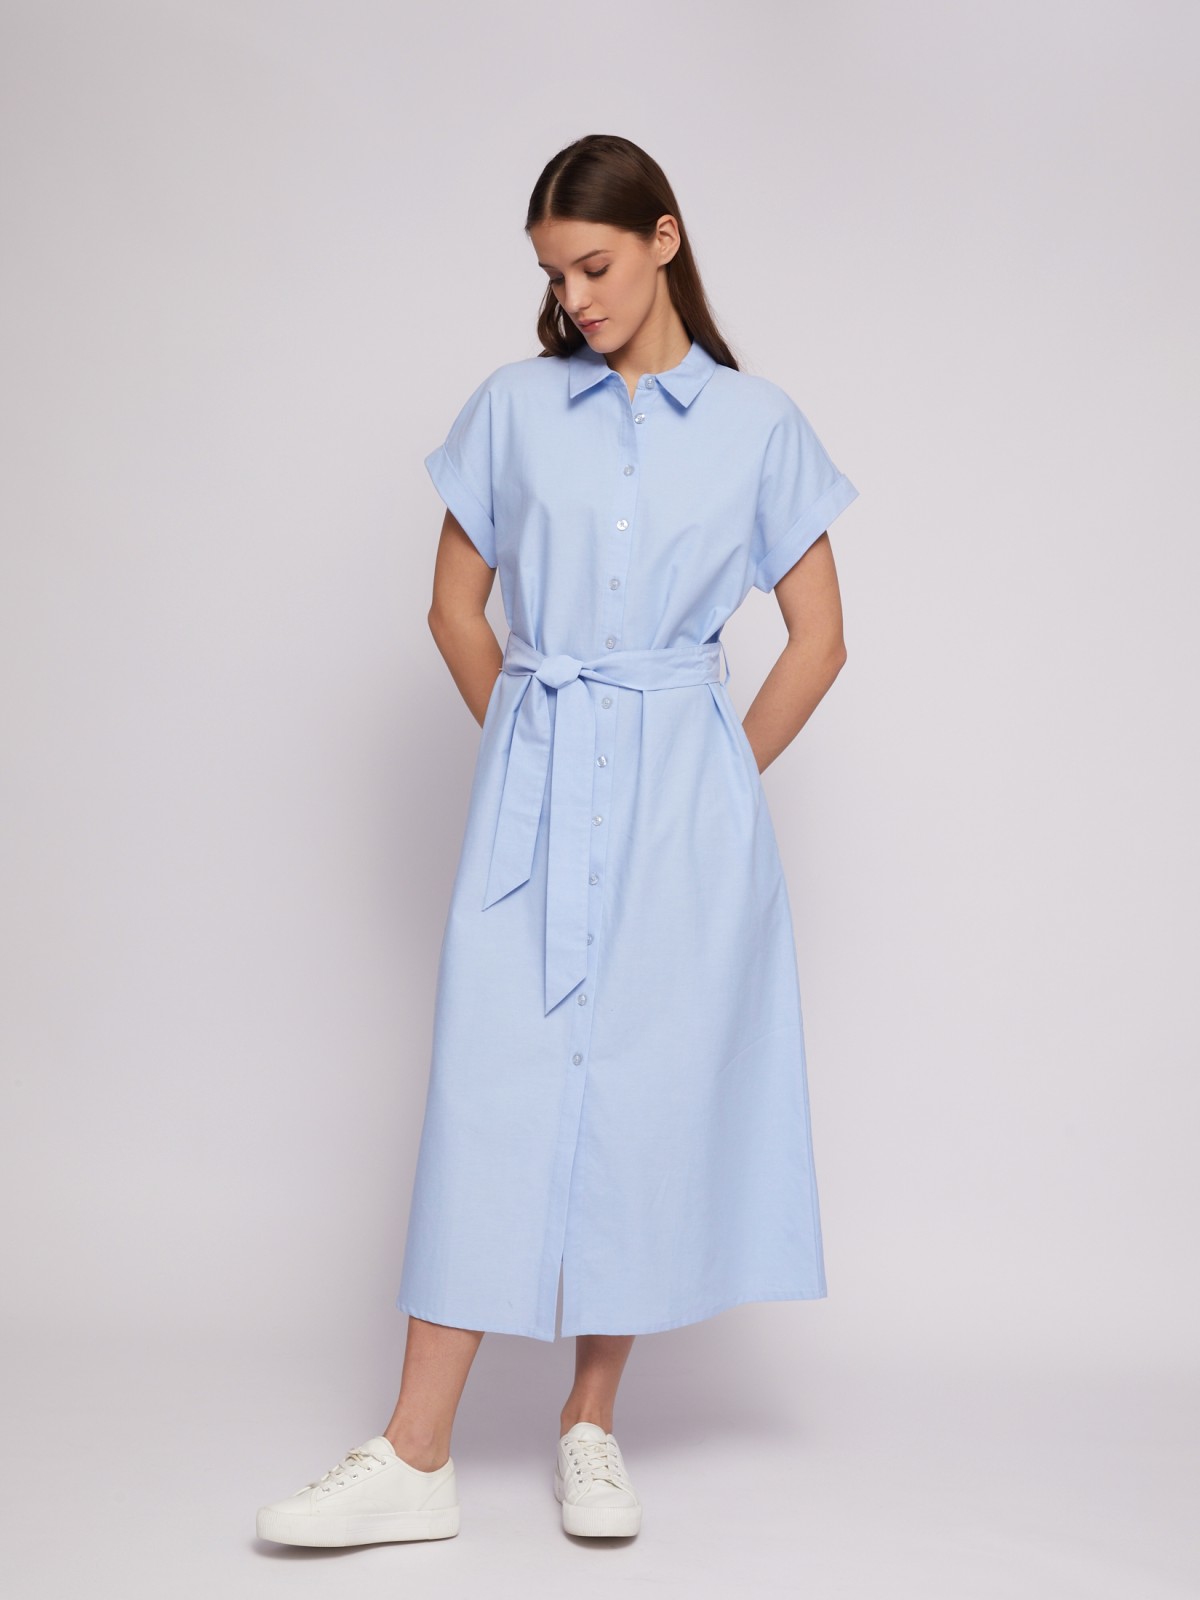 Платье-рубашка из хлопка с коротким рукавом и поясом zolla 024218262353, цвет светло-голубой, размер XS - фото 2